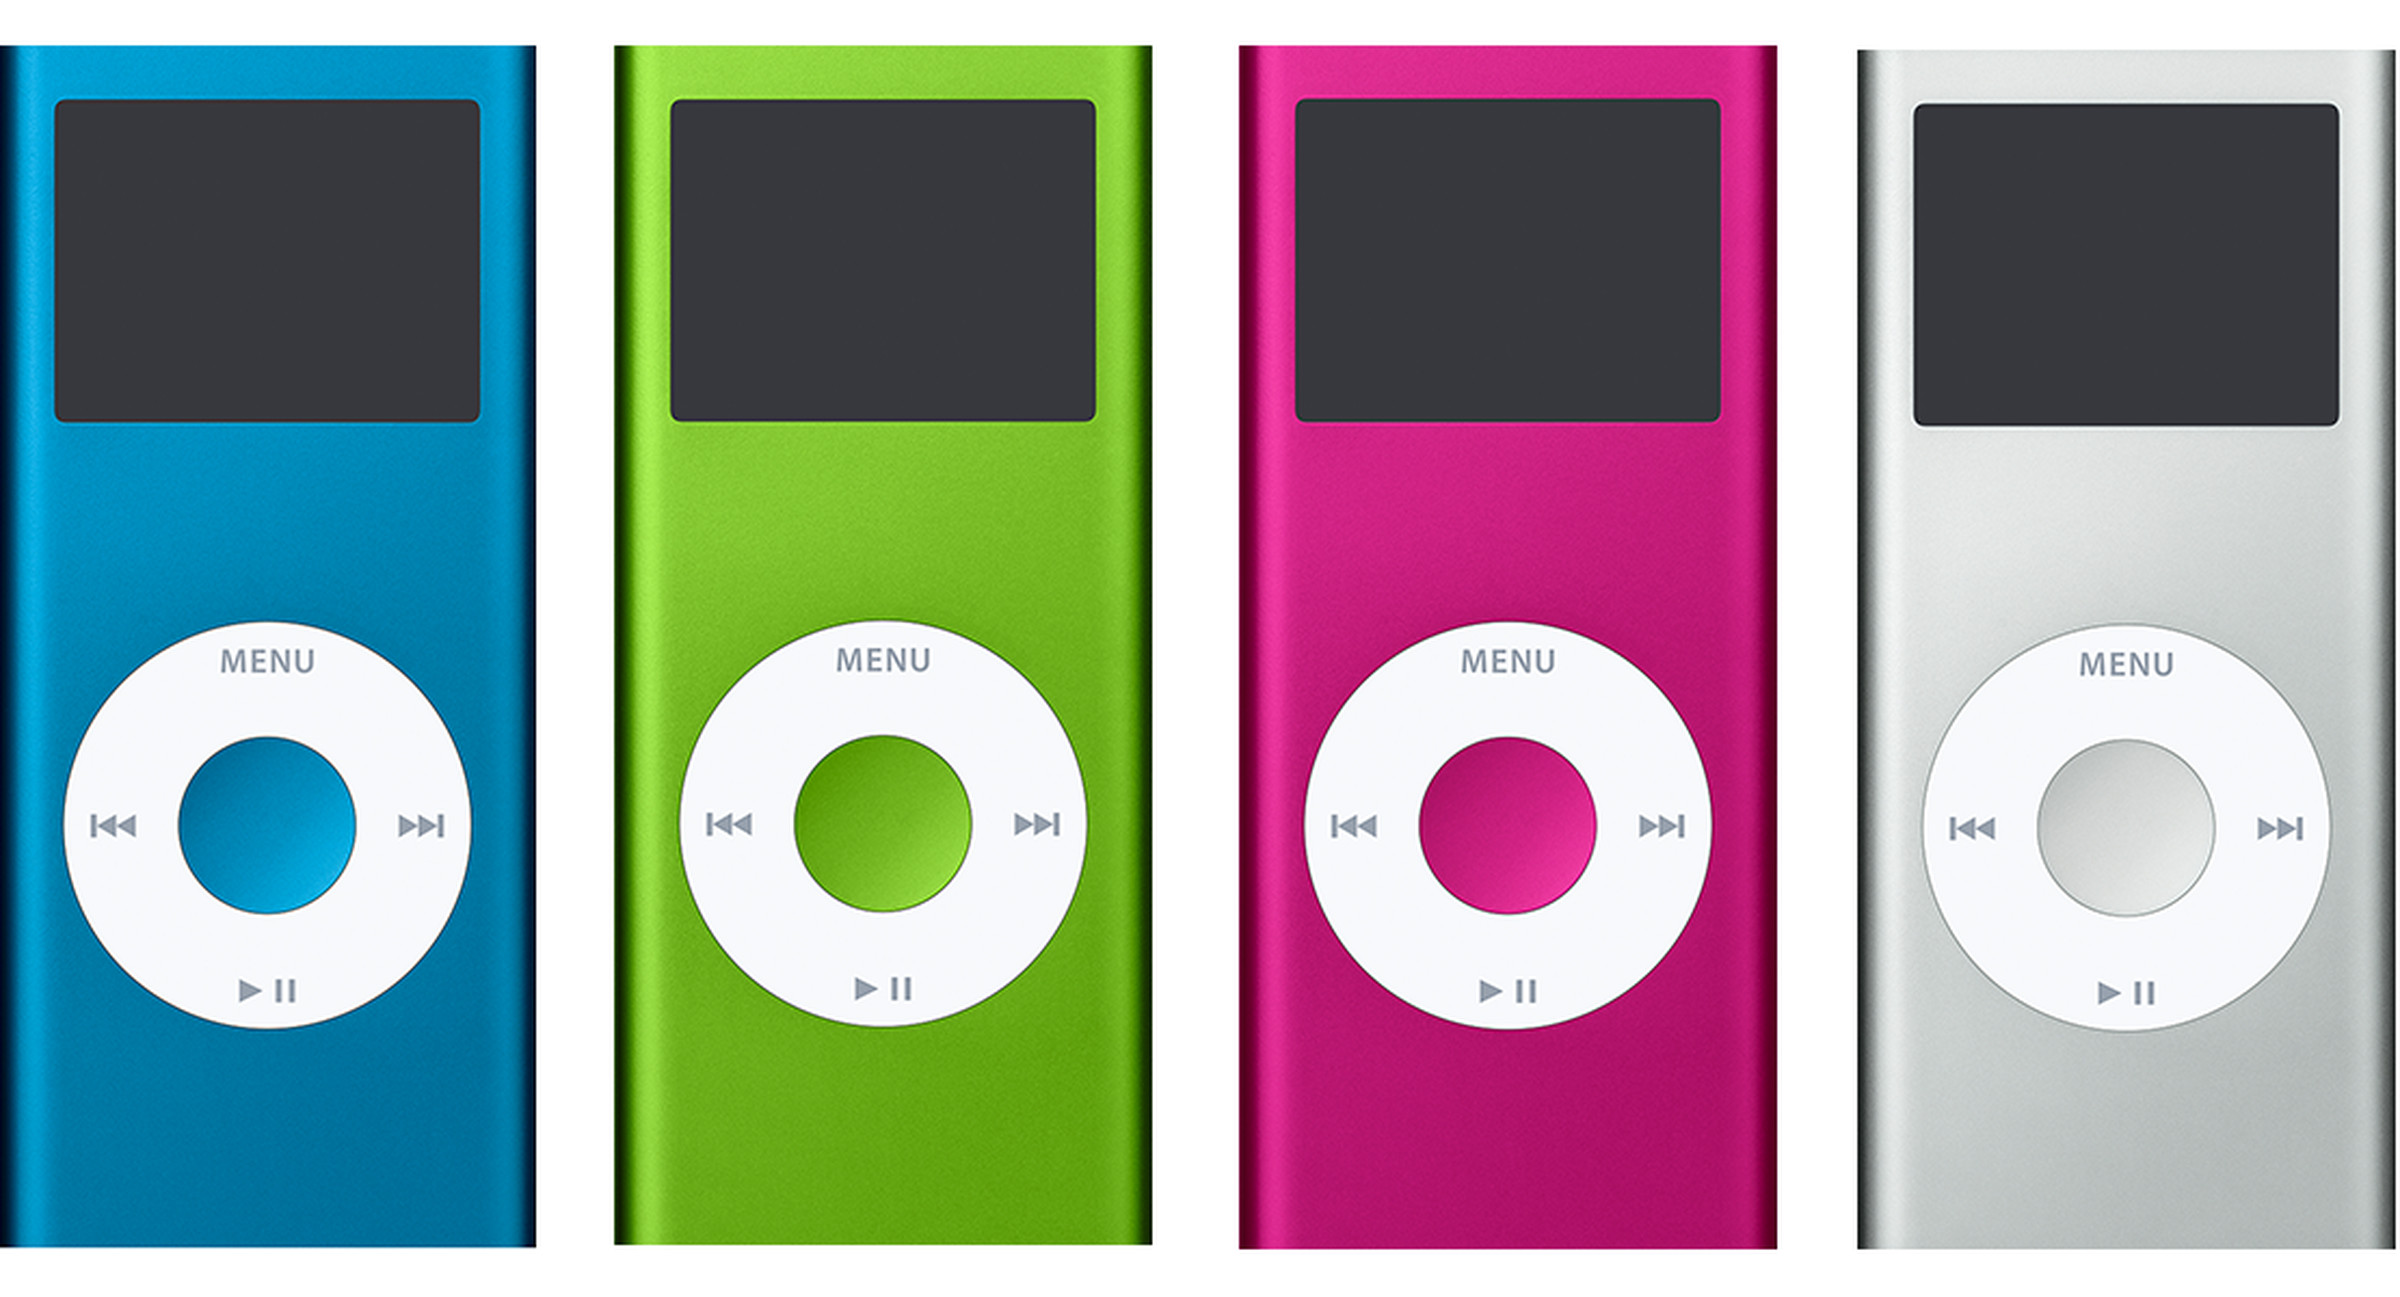 iPod nano second generation